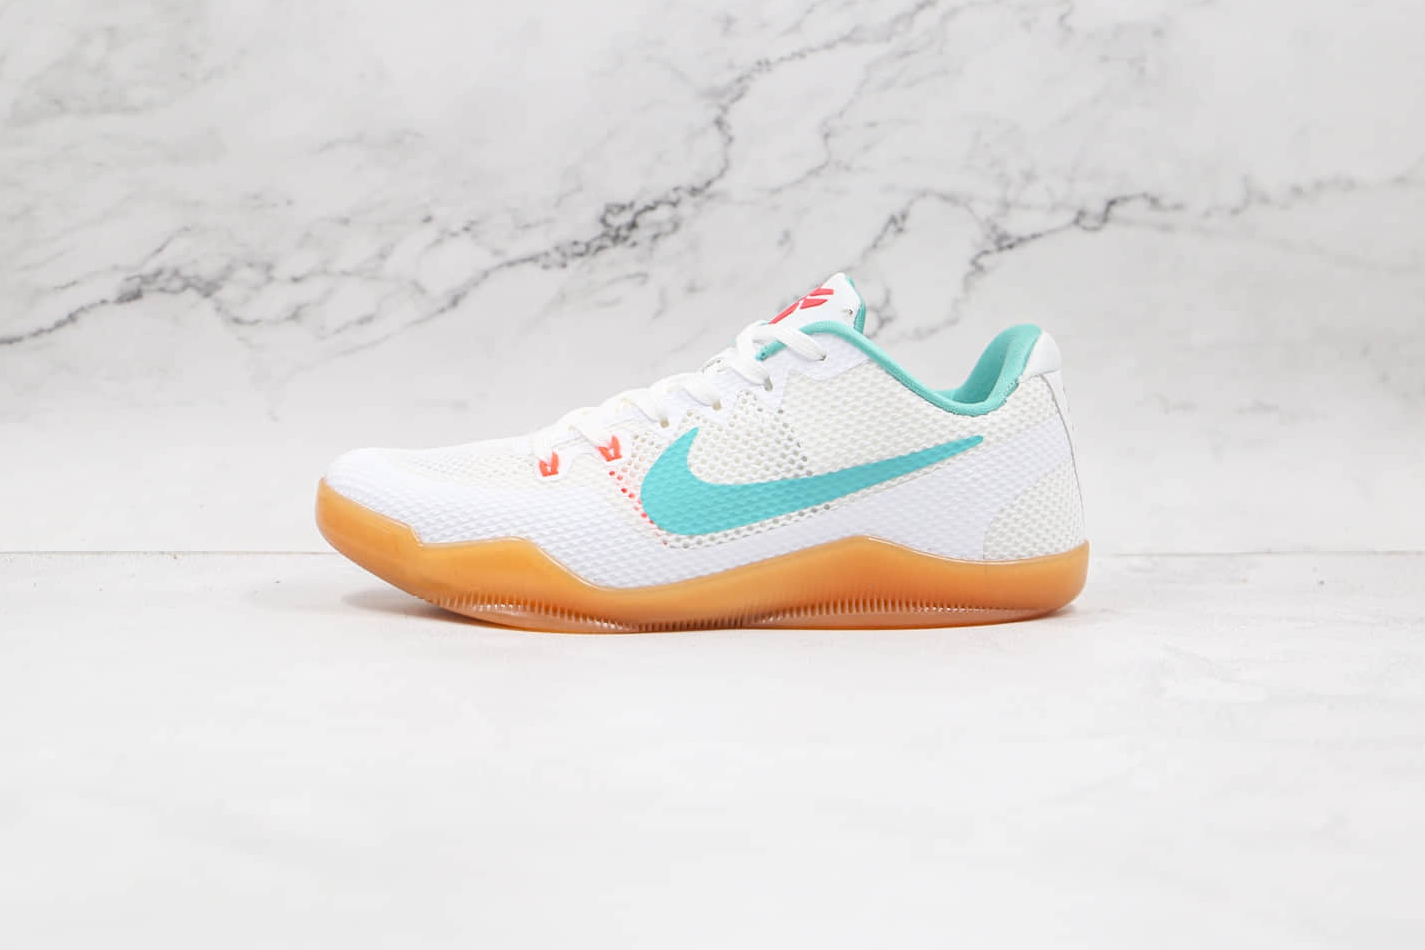 Nike Kobe 11 EP 'Summer' 836184-103 - Lightweight and Stylish Basketball Shoes